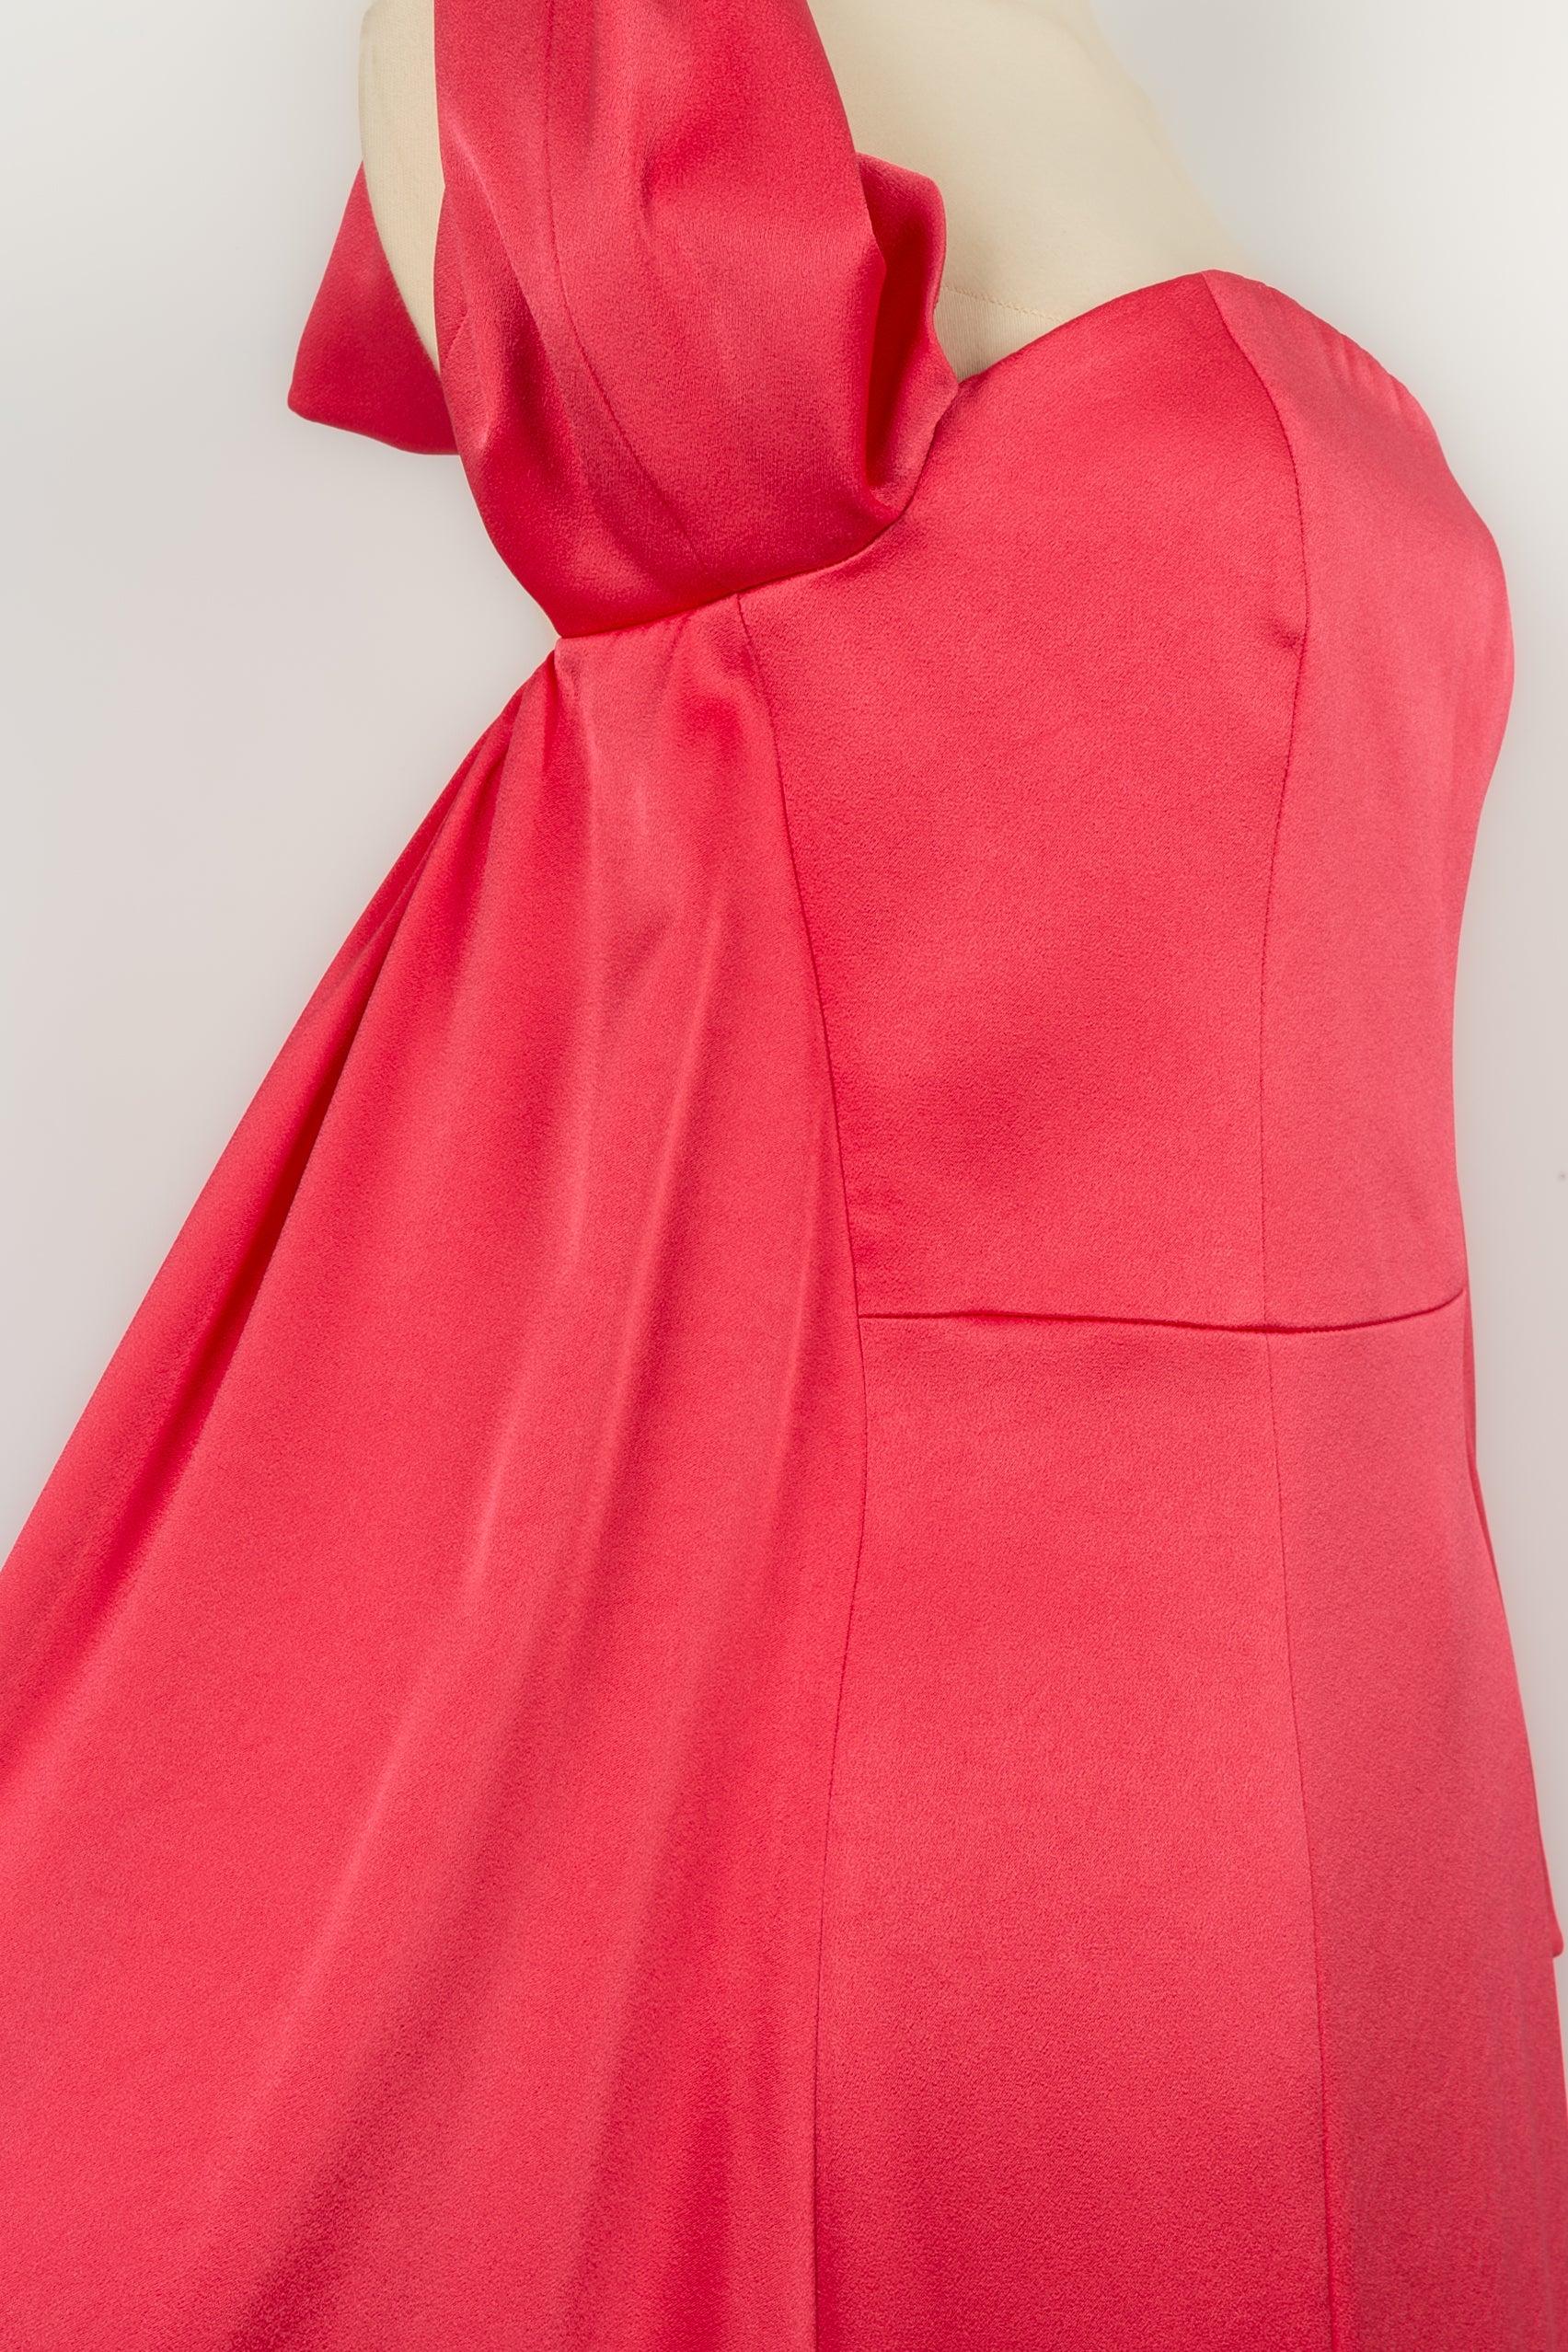 Paule Ka Maxi Long Dress in Pink Duchess Satin, 2022 For Sale 2